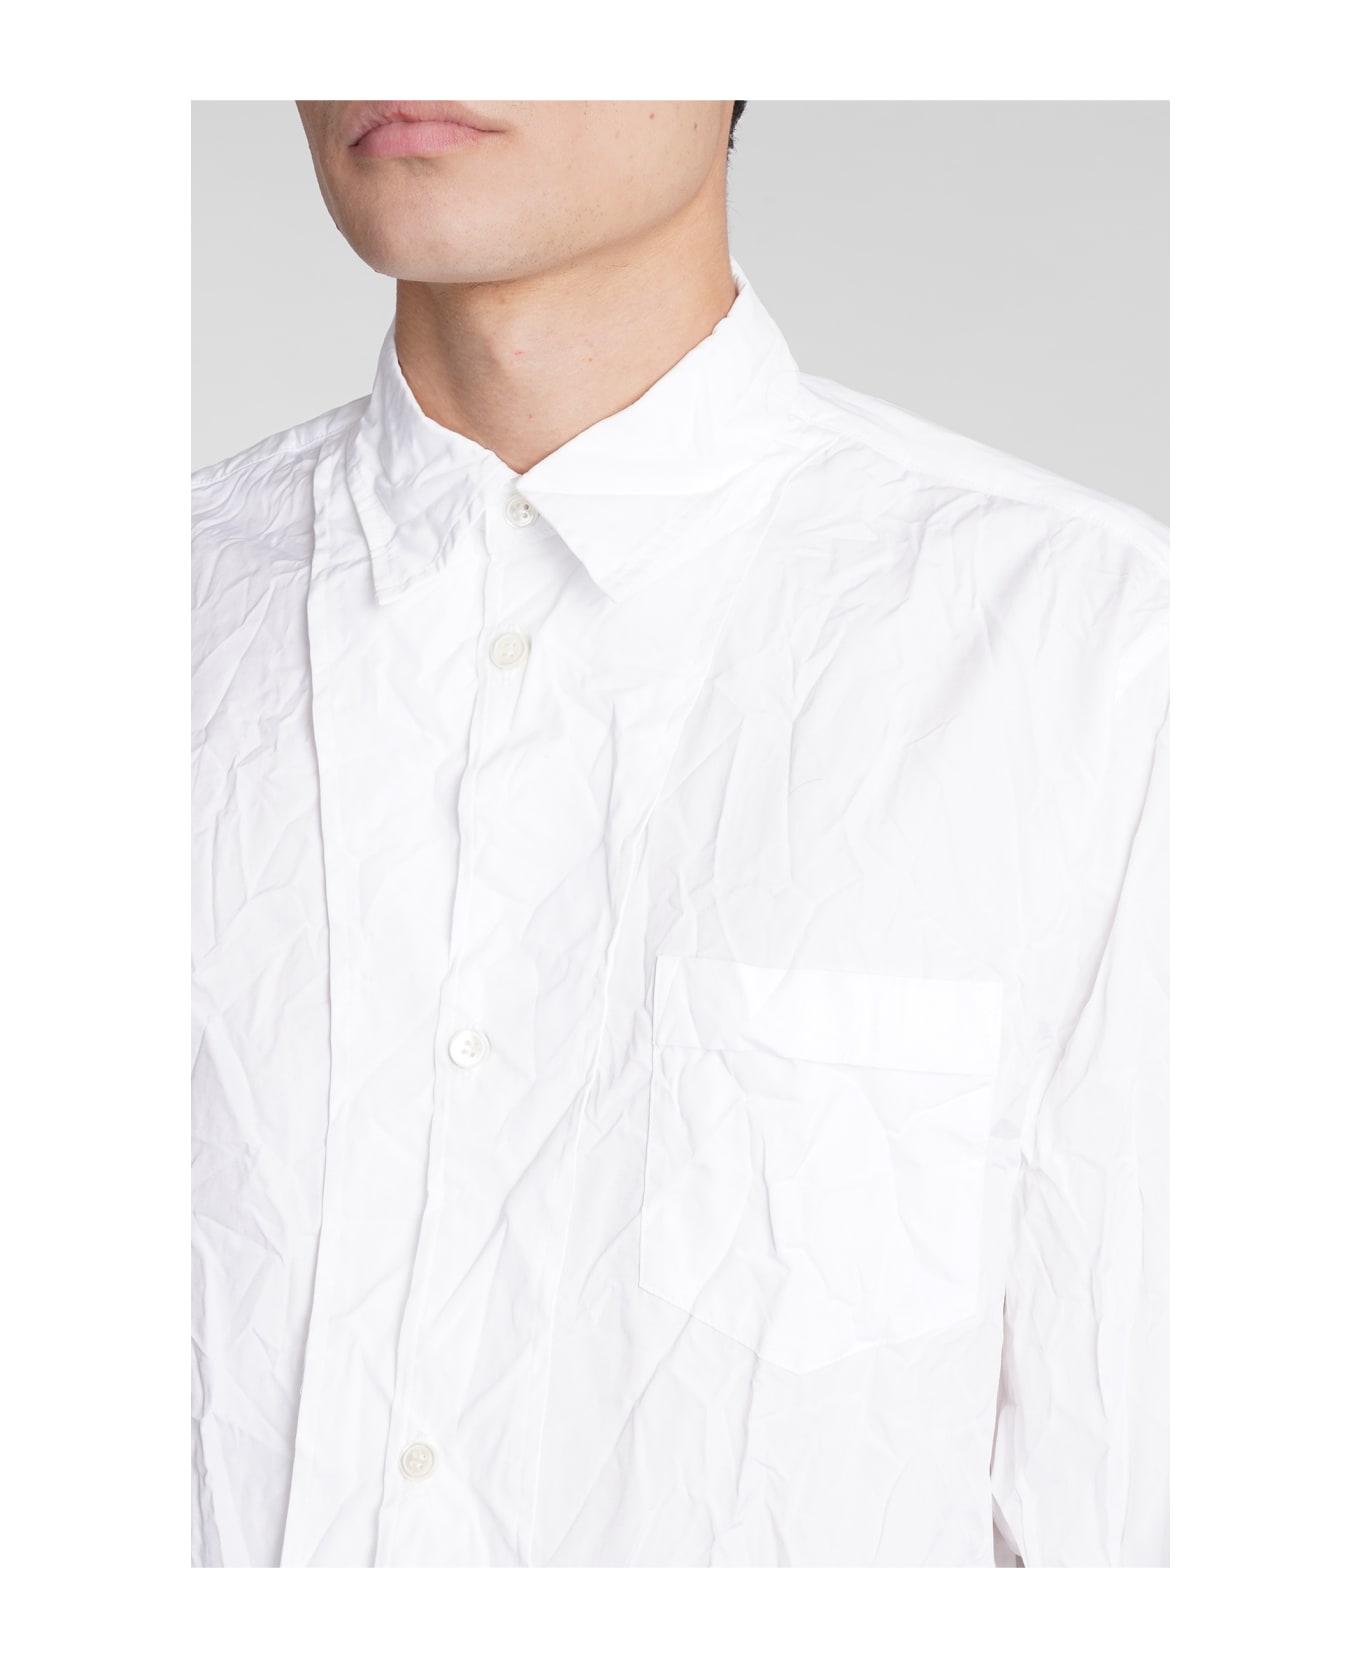 Undercover Jun Takahashi Shirt In White Cotton - white